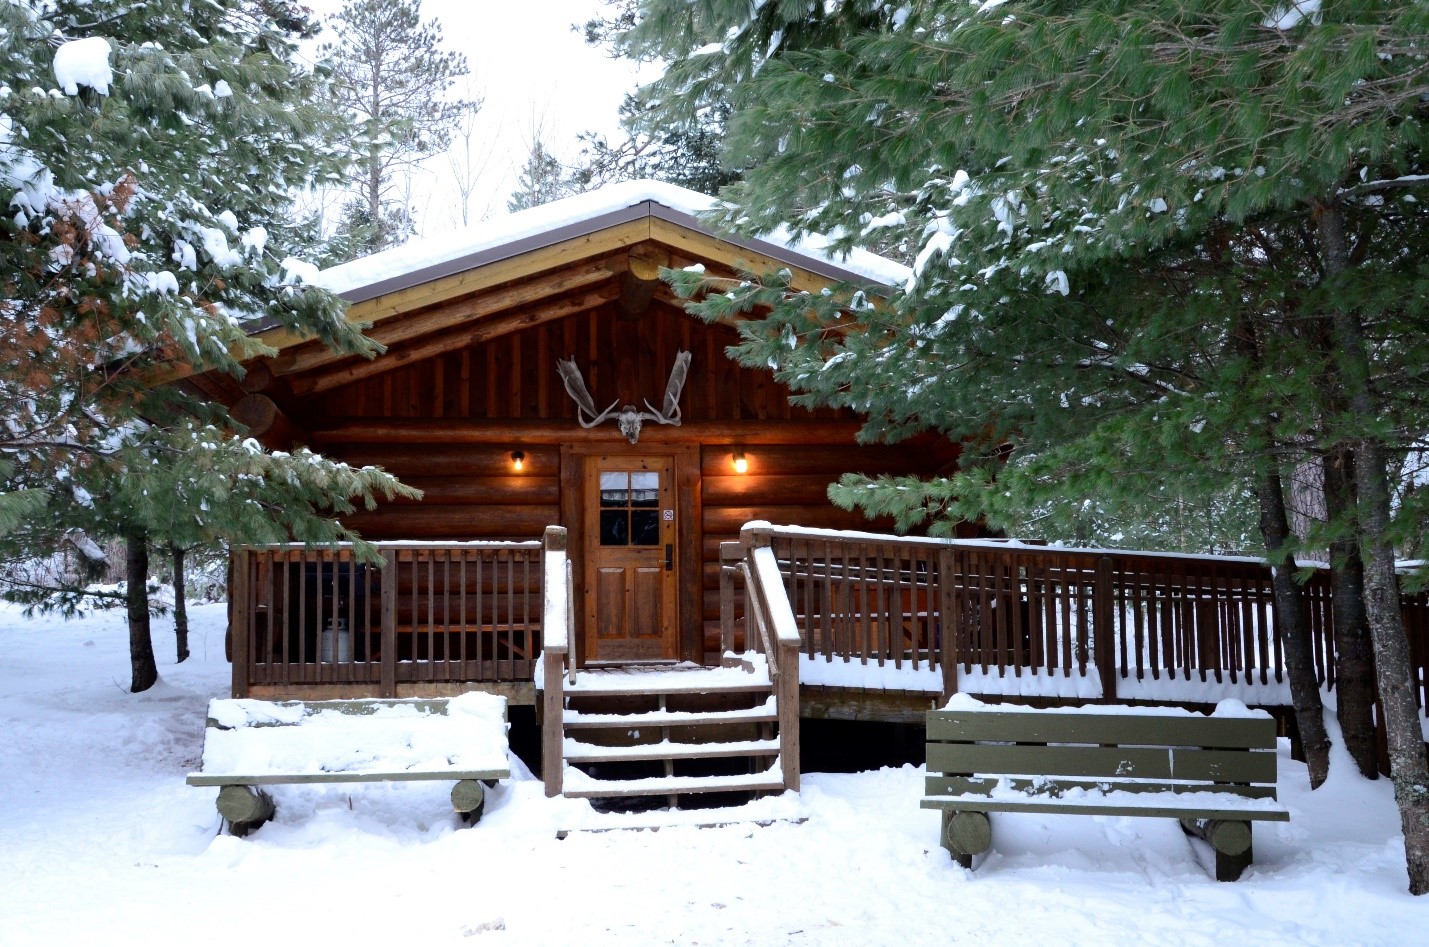 Une cabane en bois dans la neige